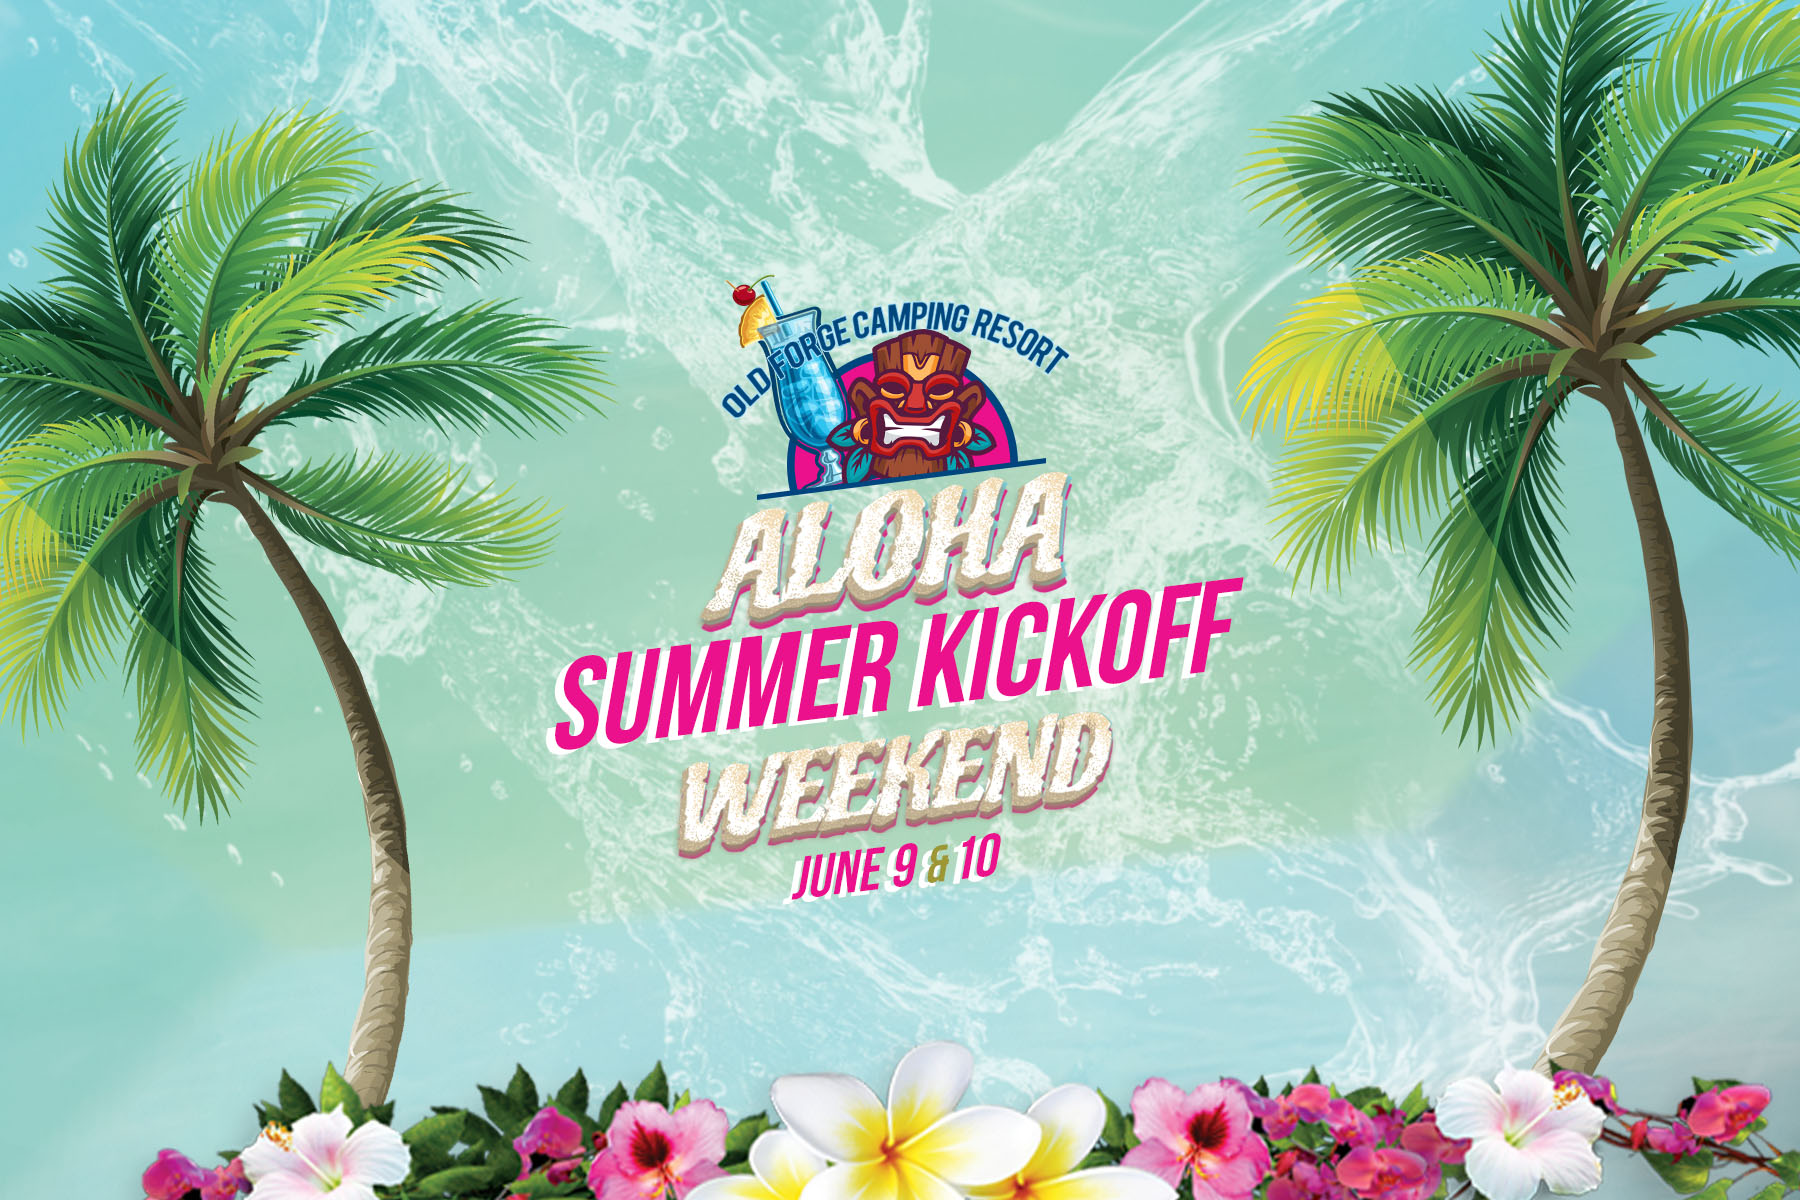 19th Annual Aloha Summer Kick-Off at Old Forge Camping Resort